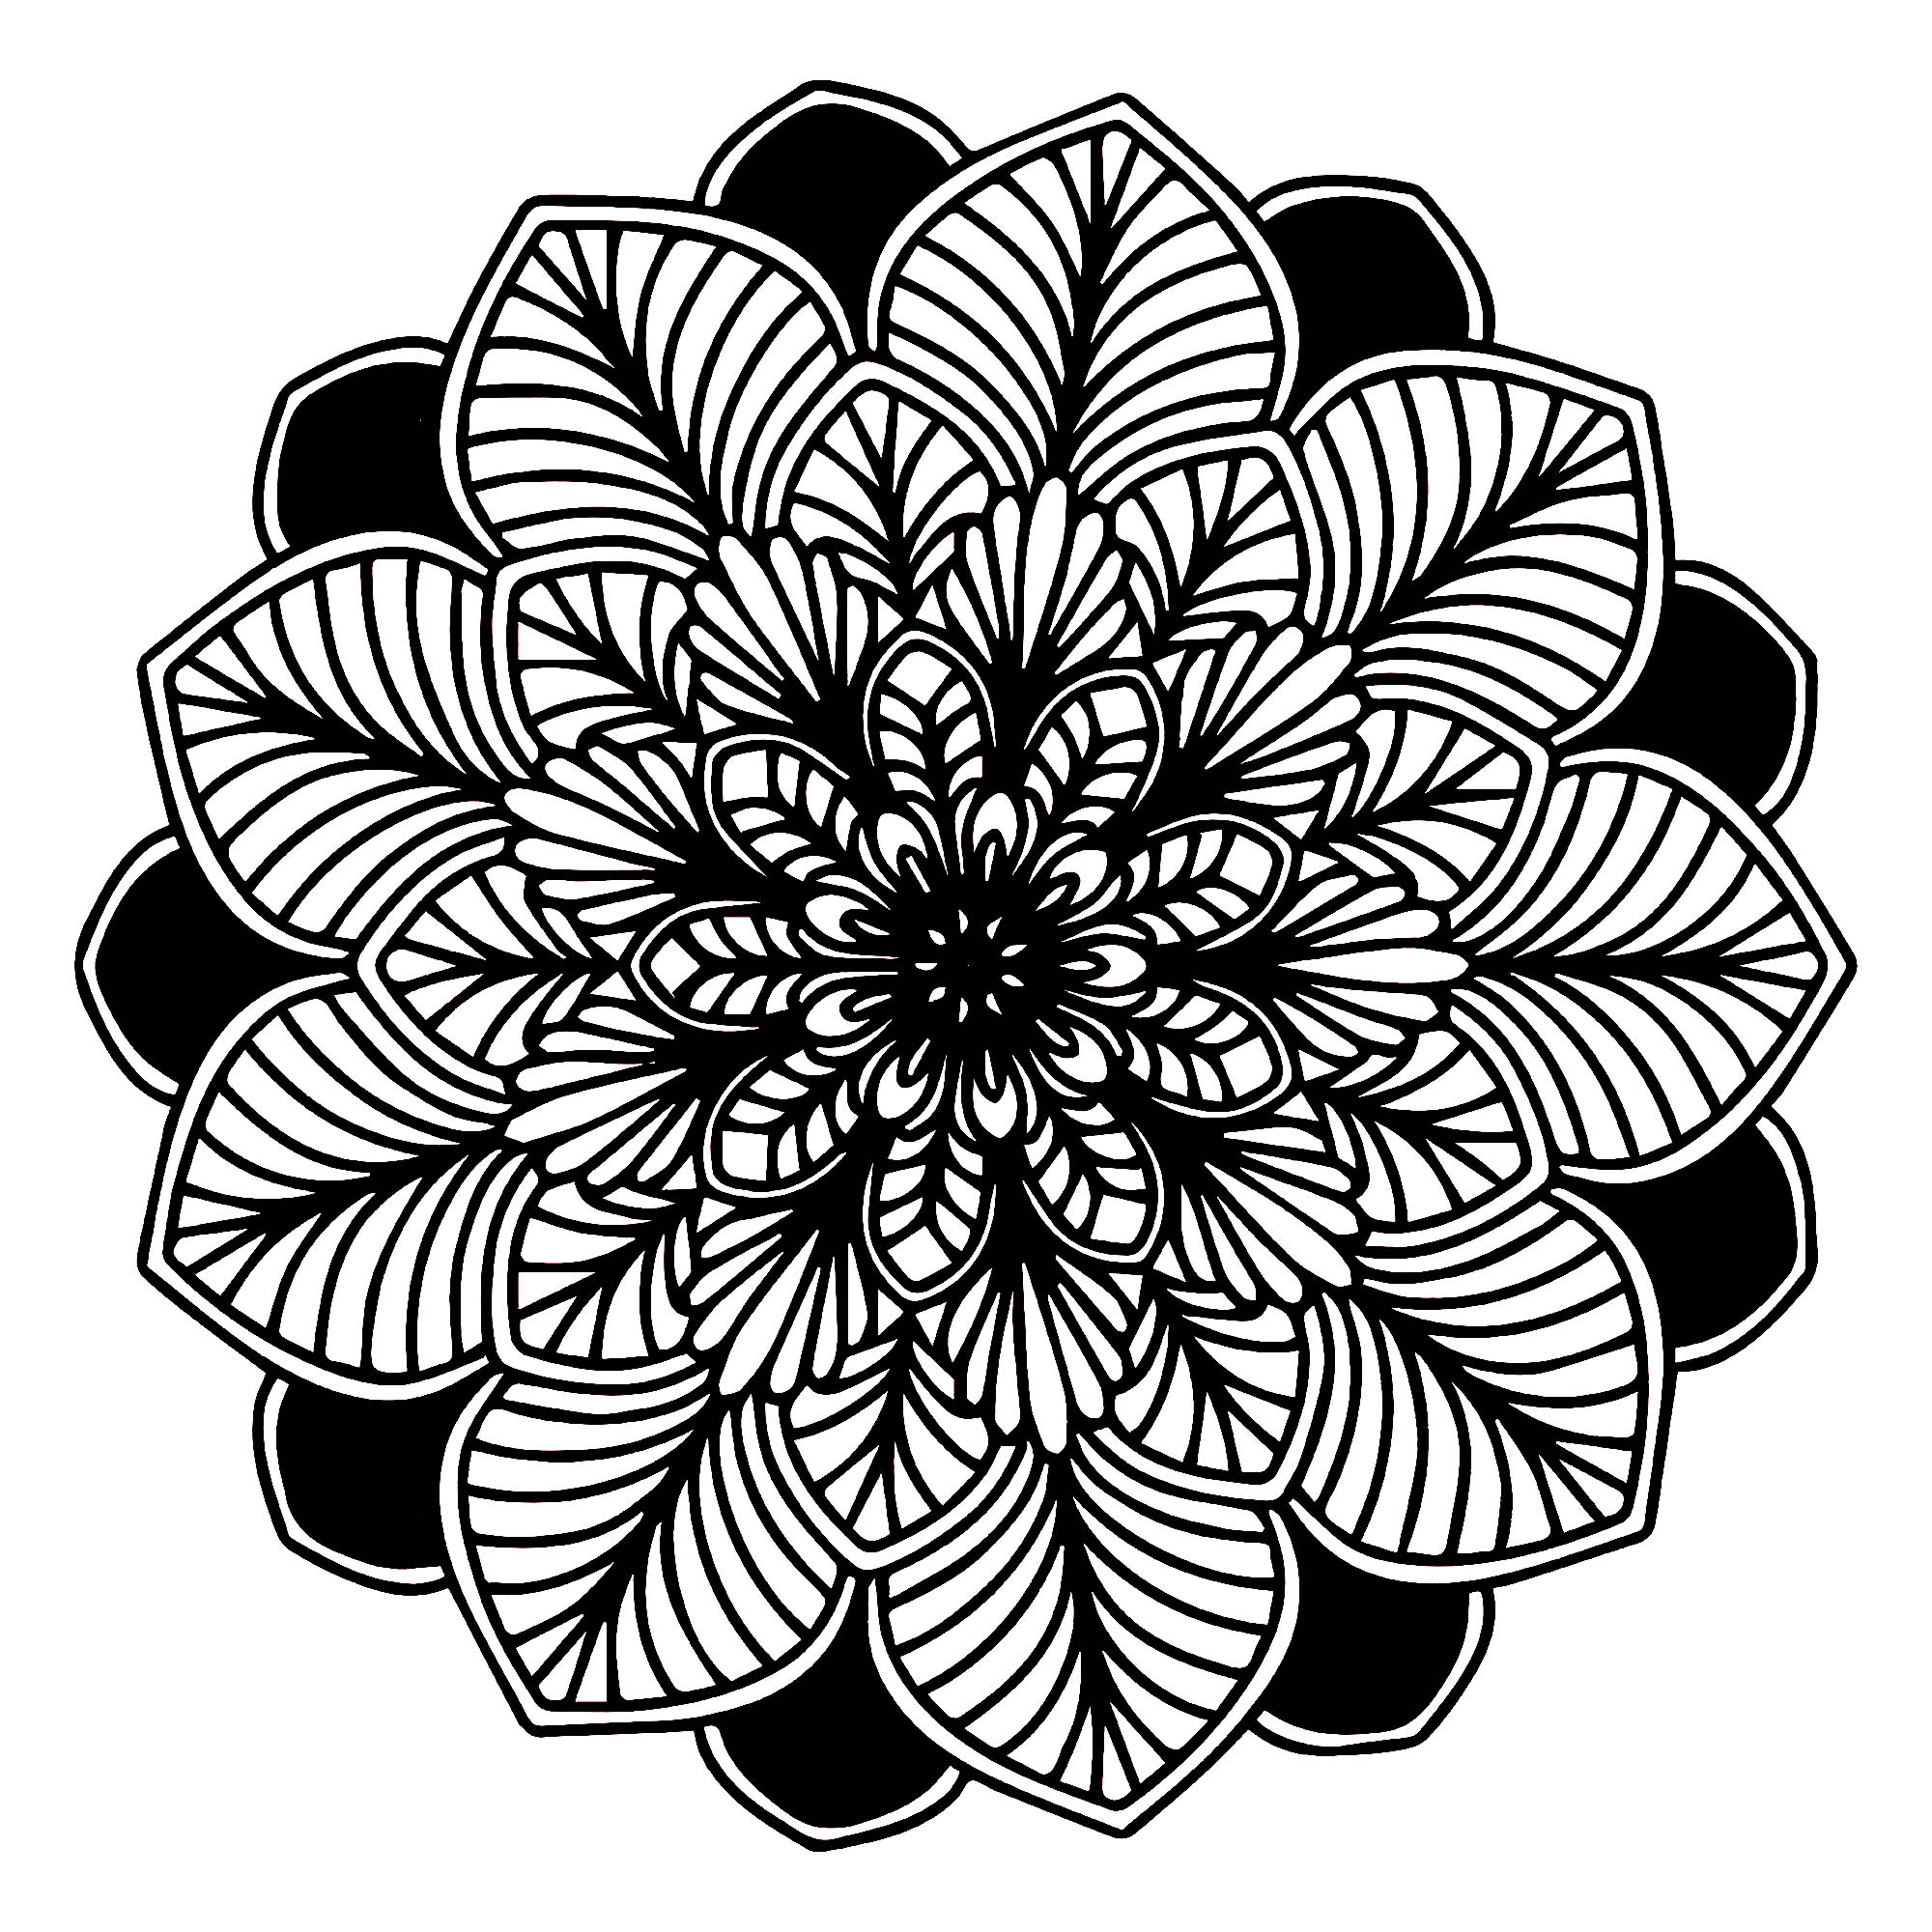 Download Black & White Mandala - Mandalas Adult Coloring Pages